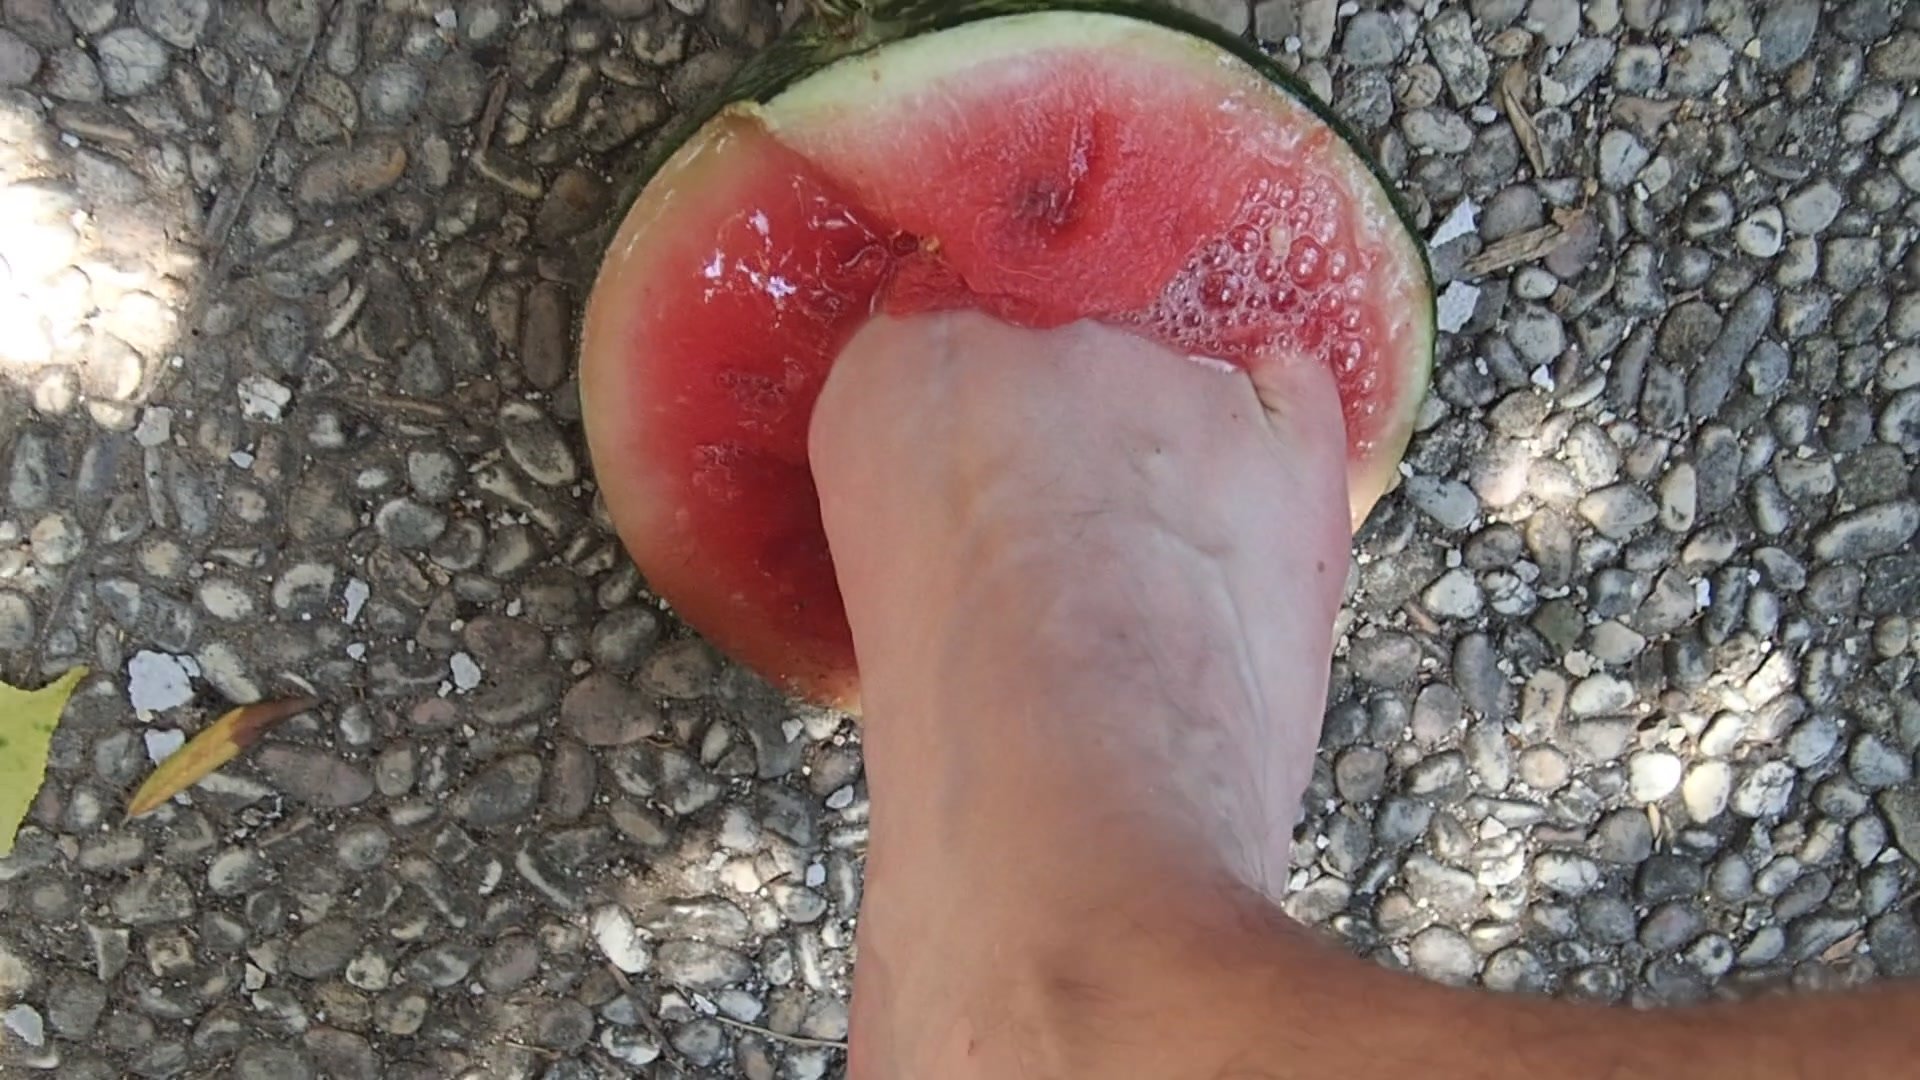 just using a watermelon as a big tongue